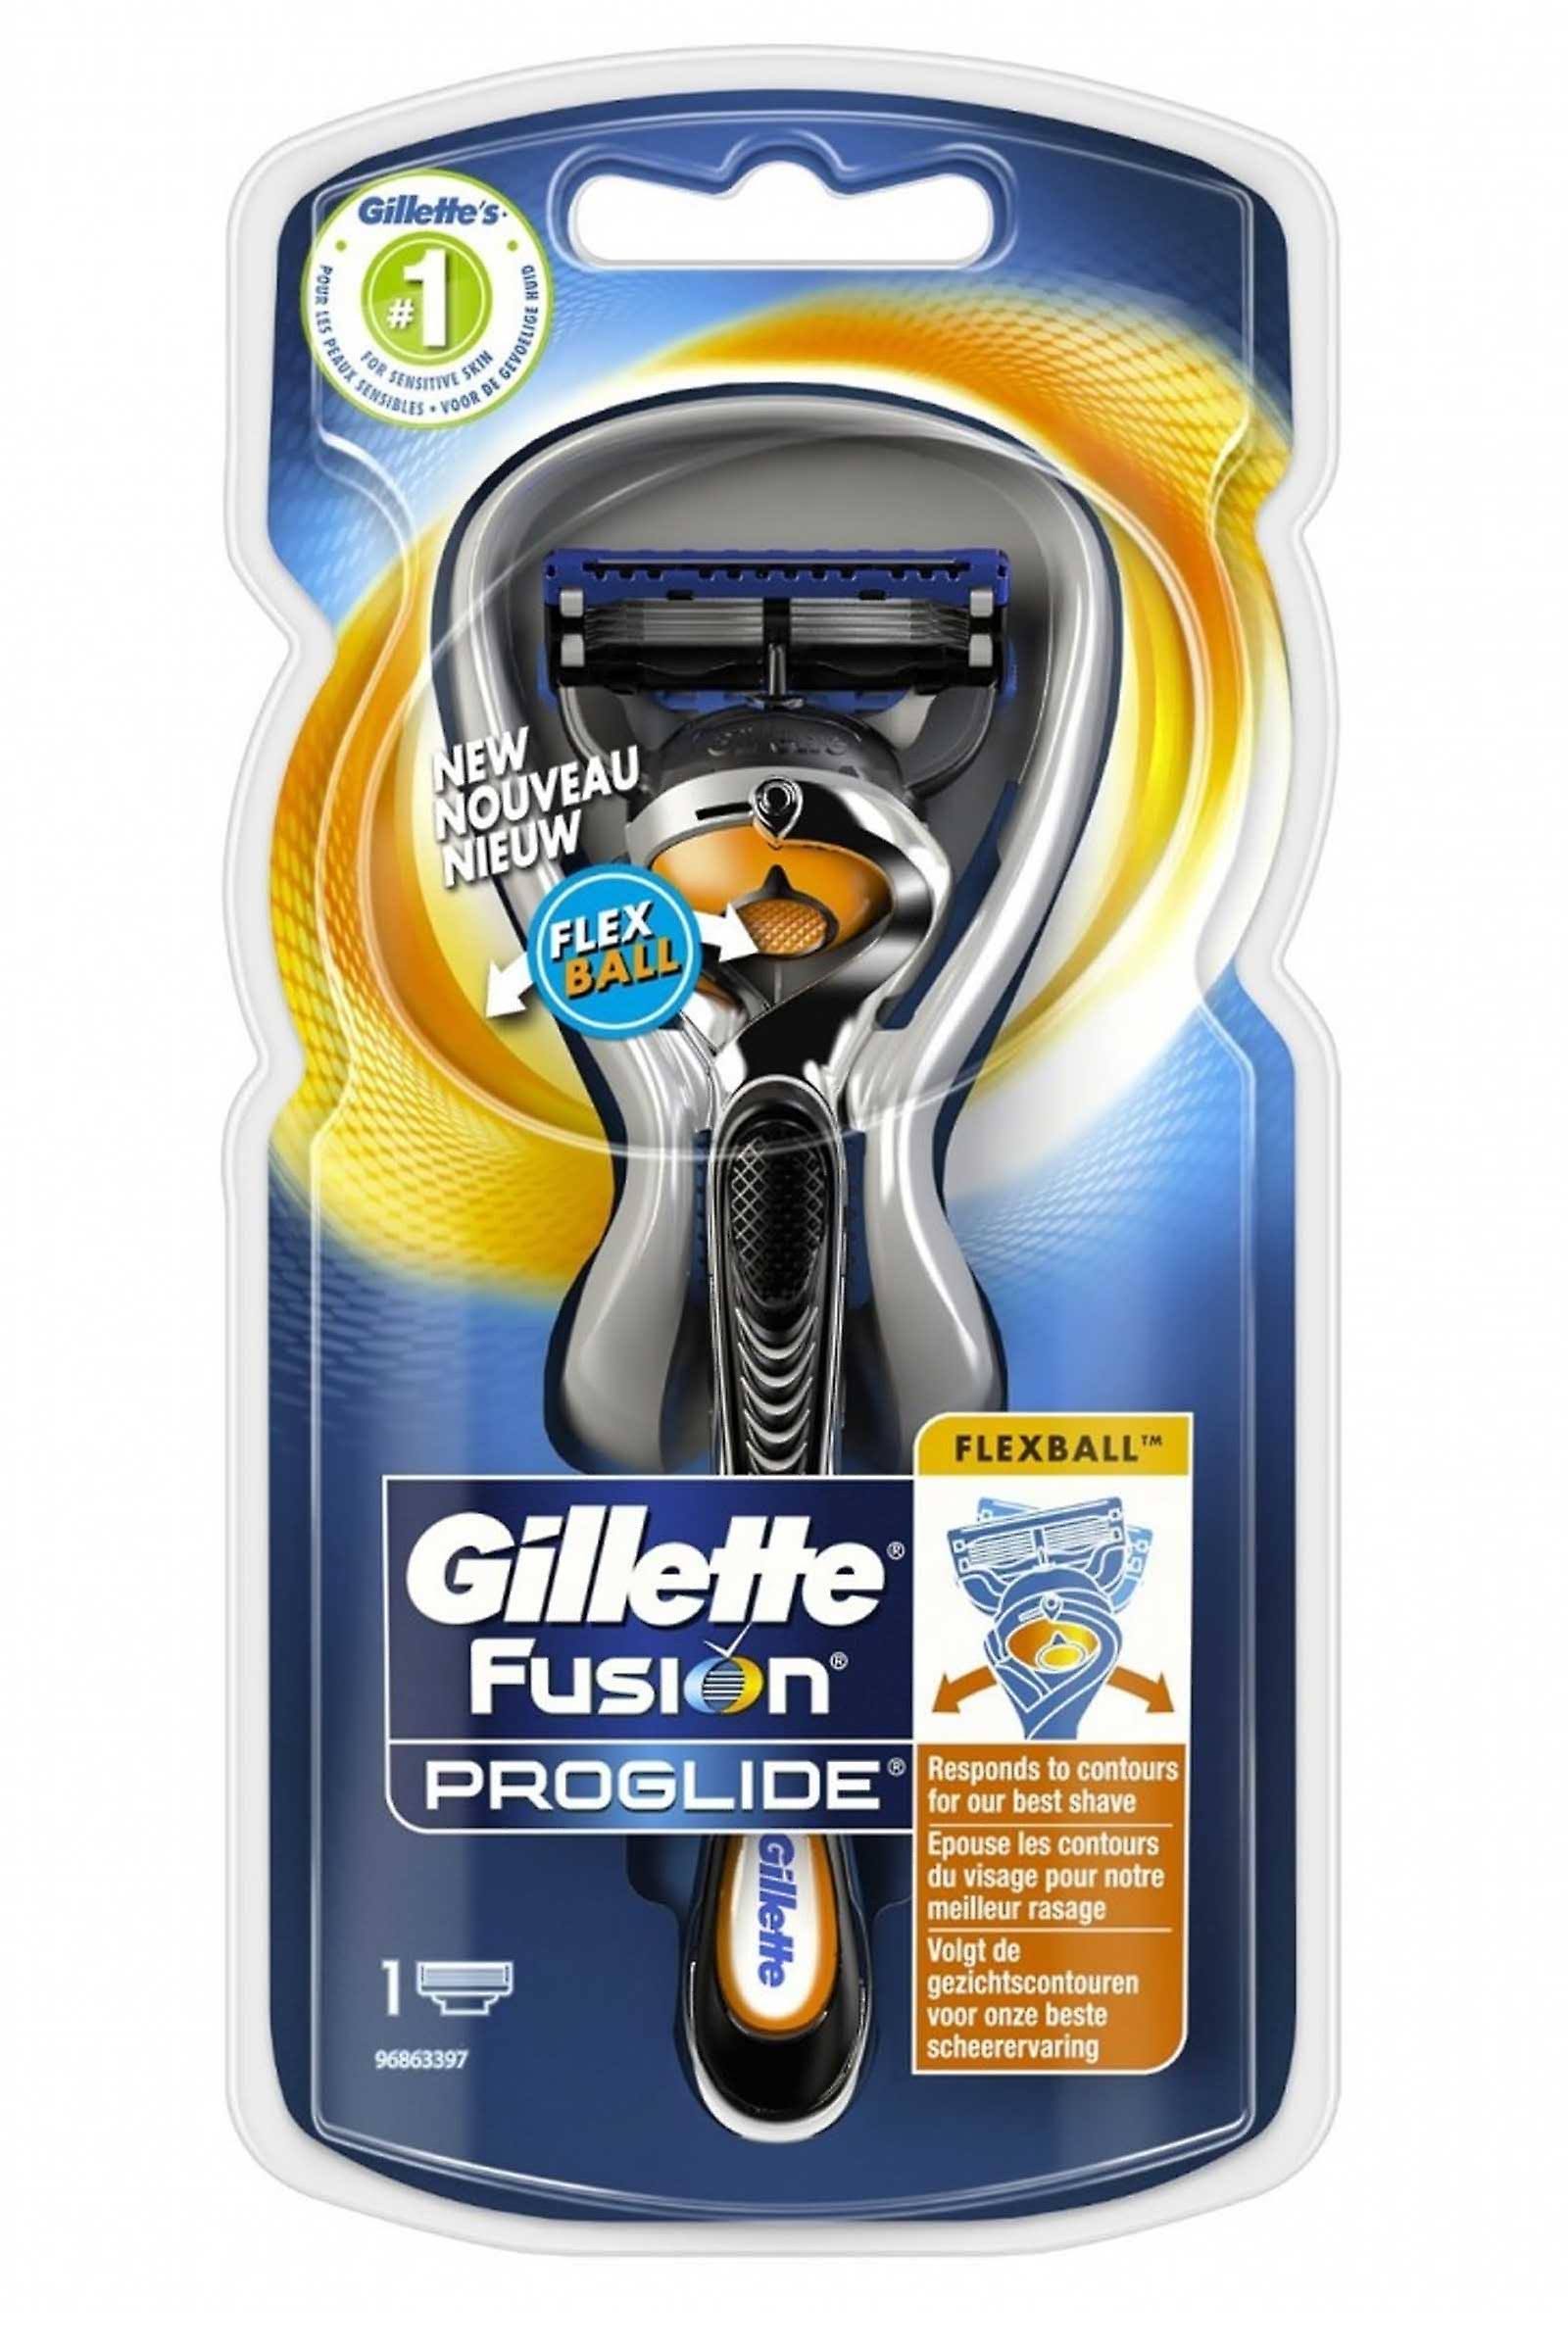 Gillette Fusion Pro Glide with New Flexball Technology Manual Razor